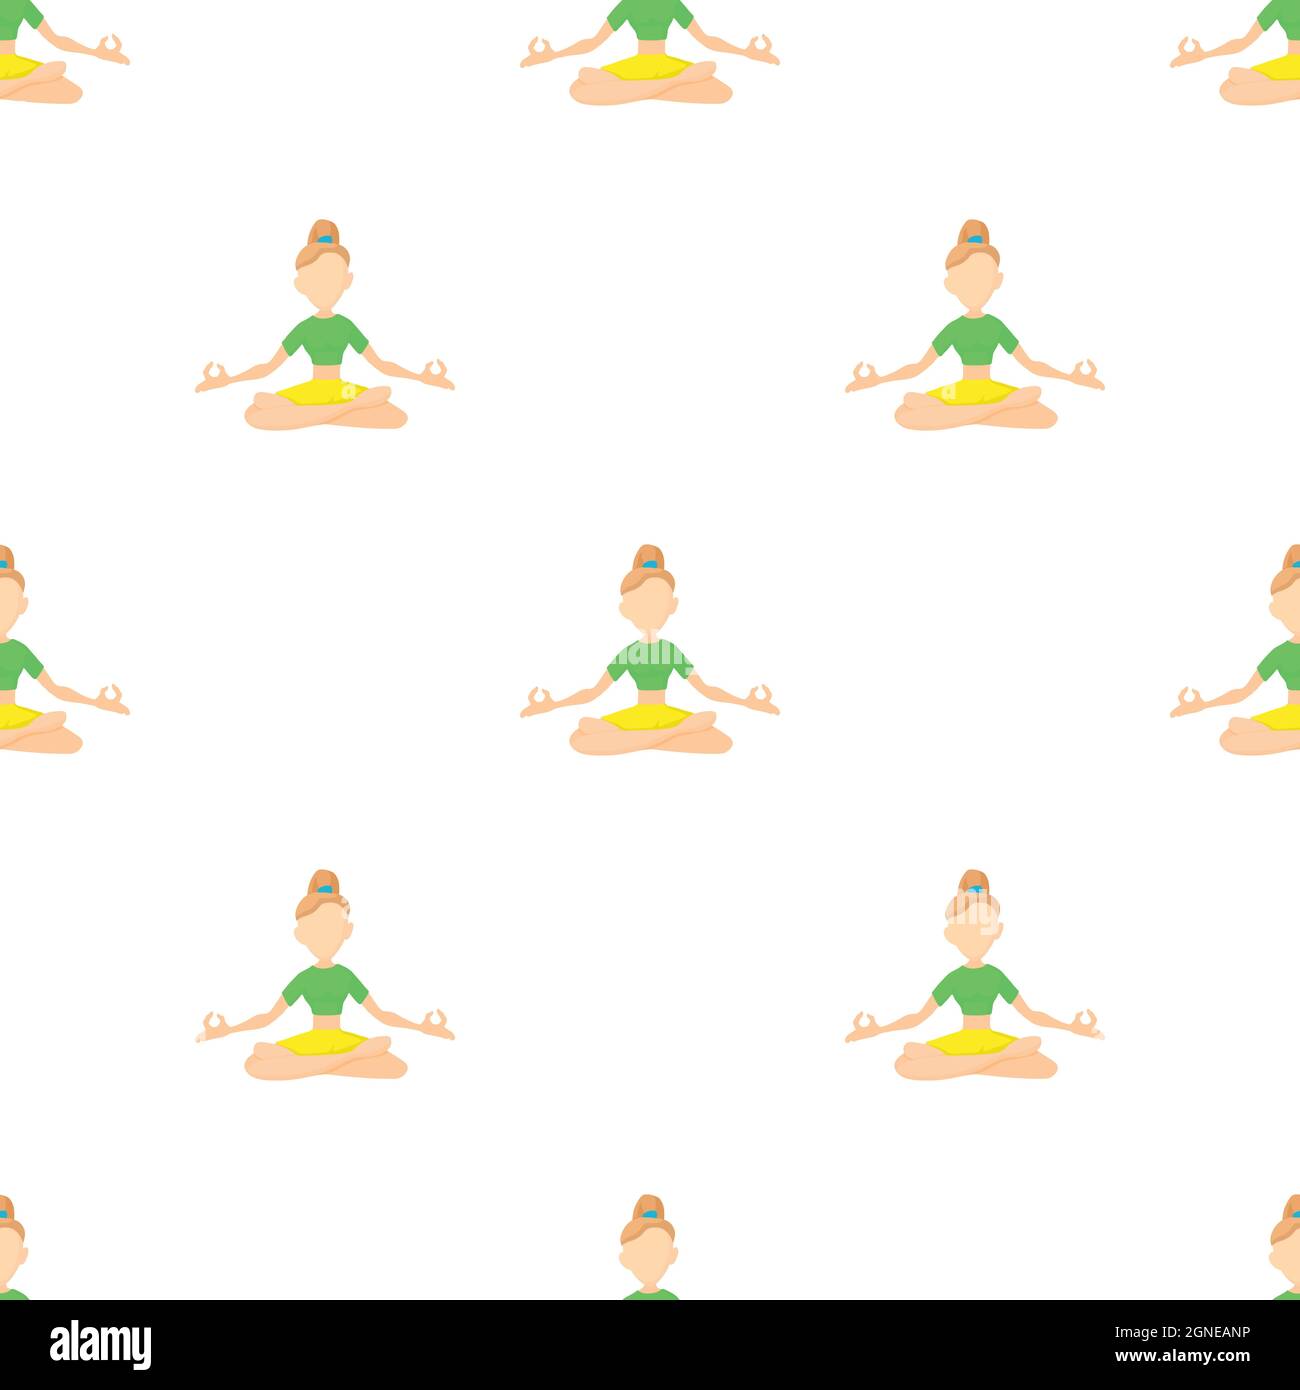 Manga Yoga Girl Bridge Pose Background Seamless Wallpaper Stock  Illustration - Download Image Now - iStock